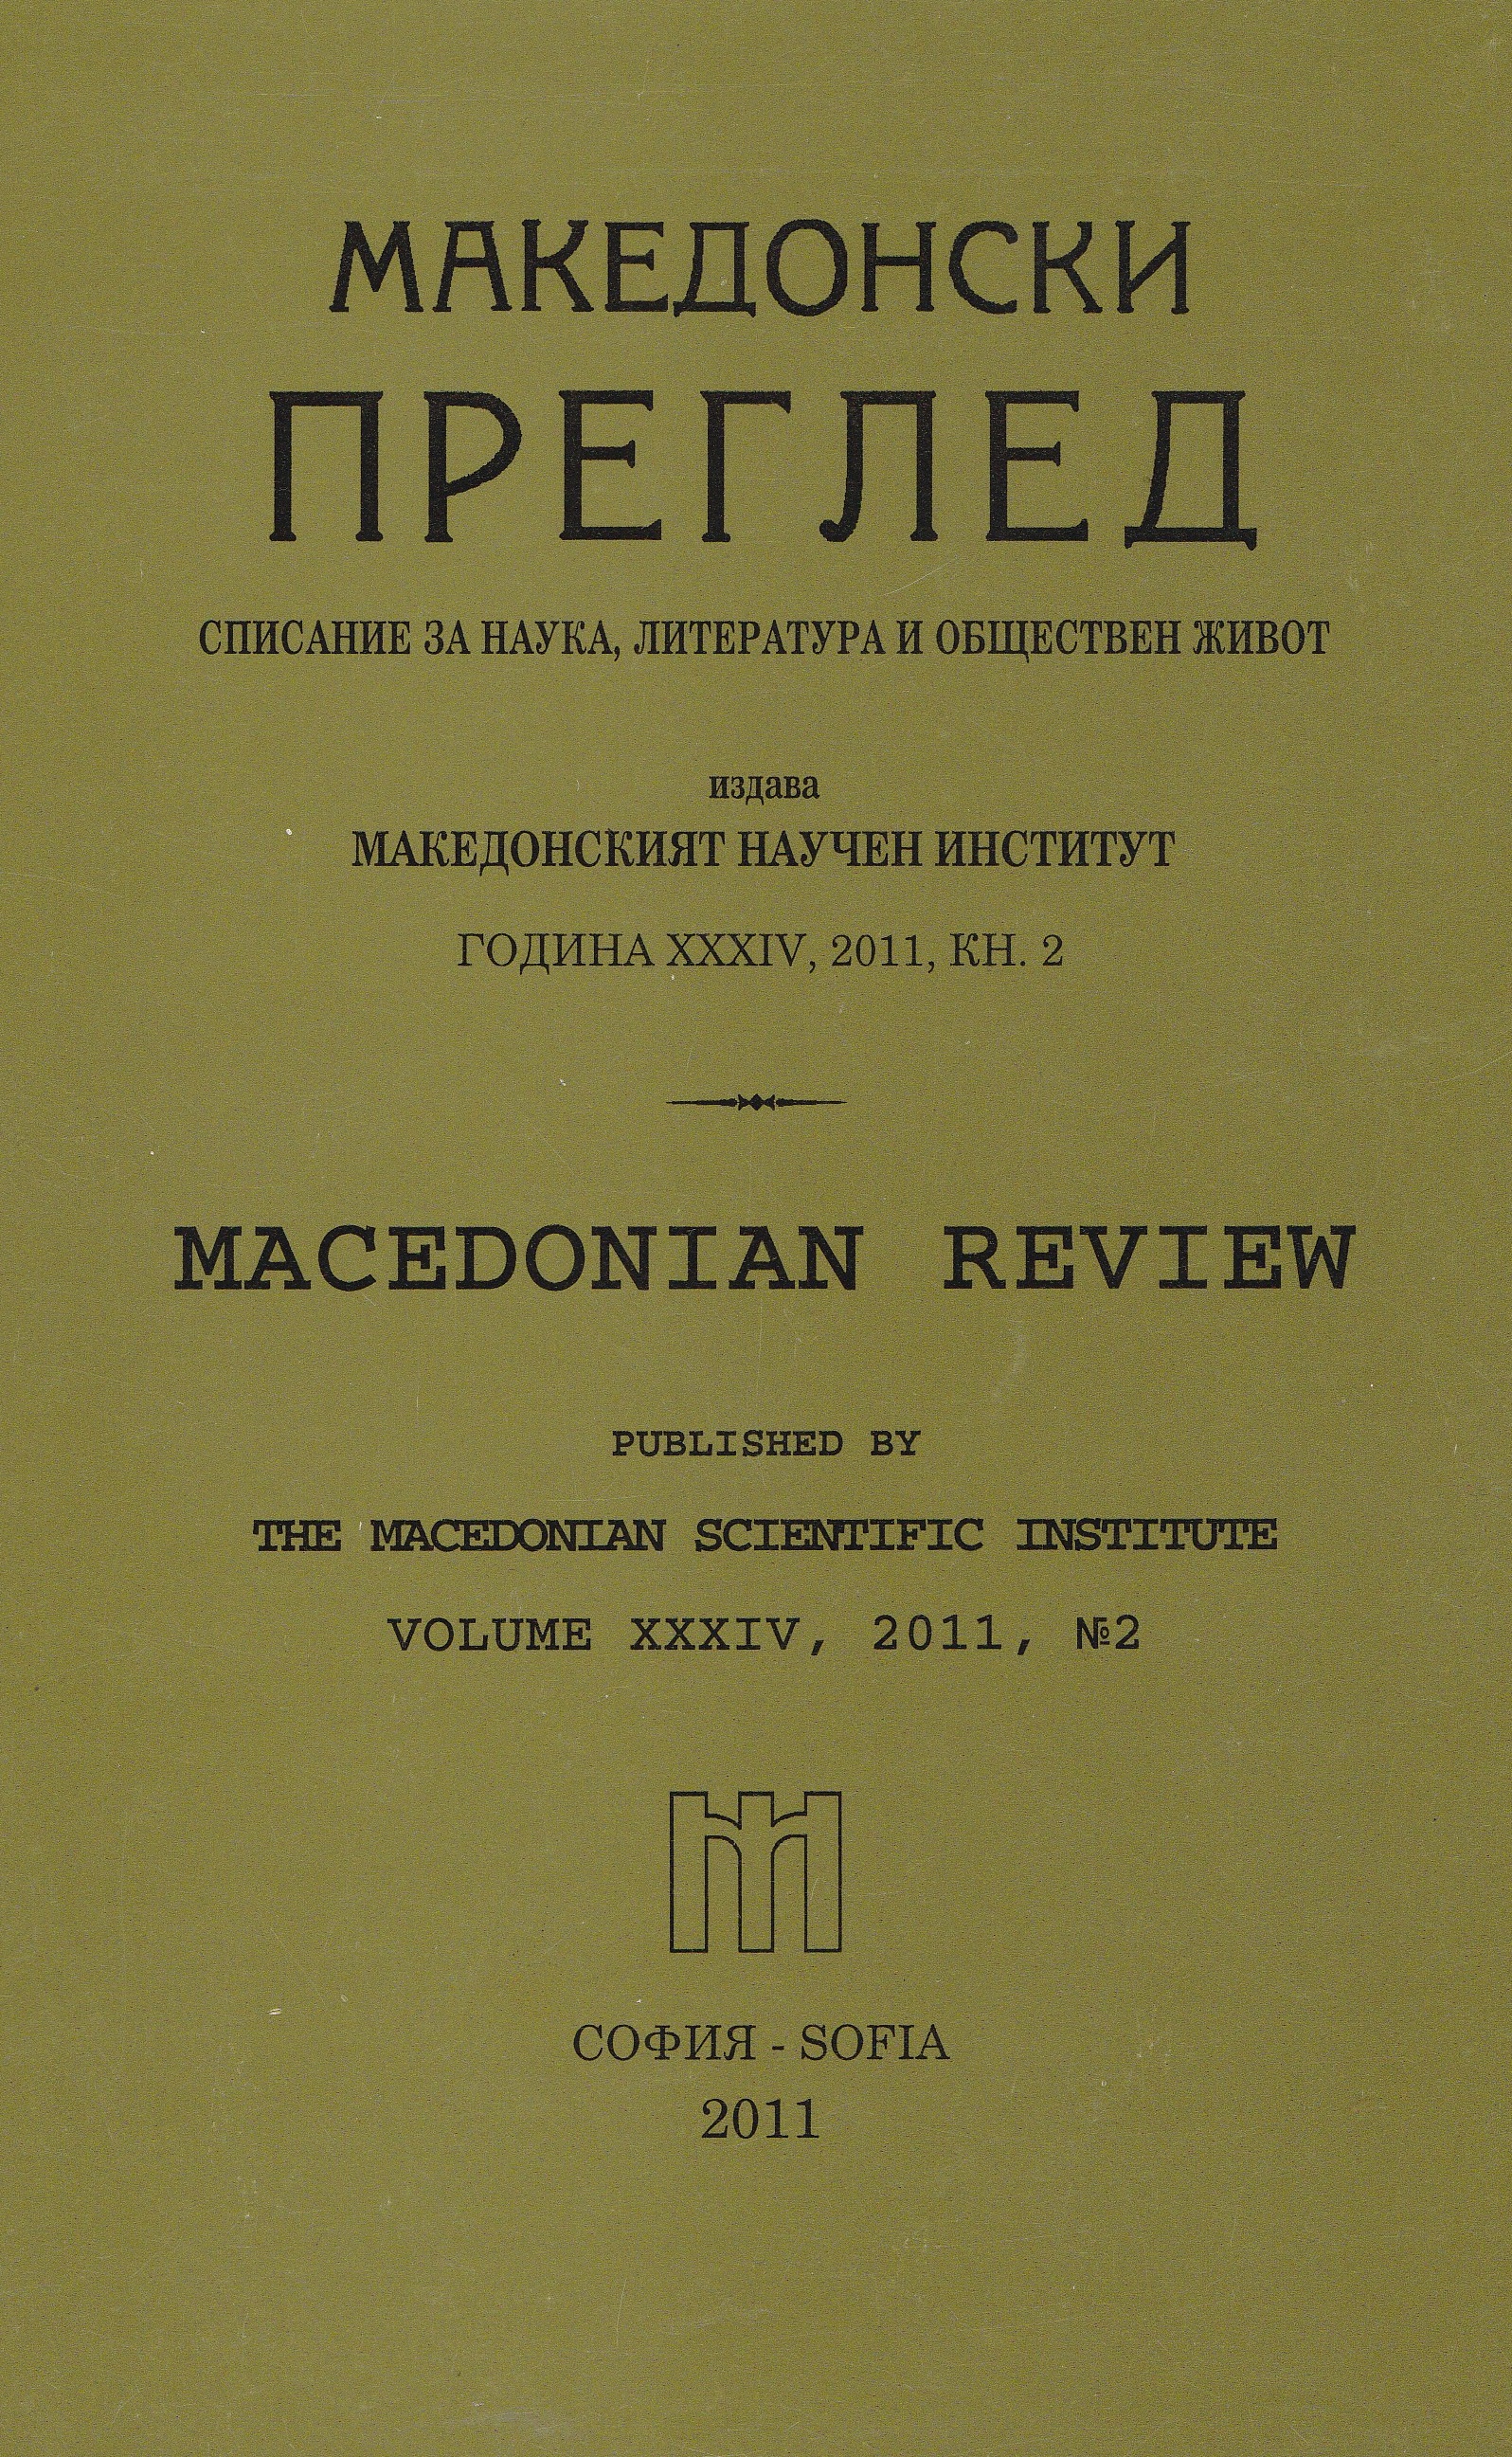 Dr. Konstantin Mishaikov (second part) Cover Image